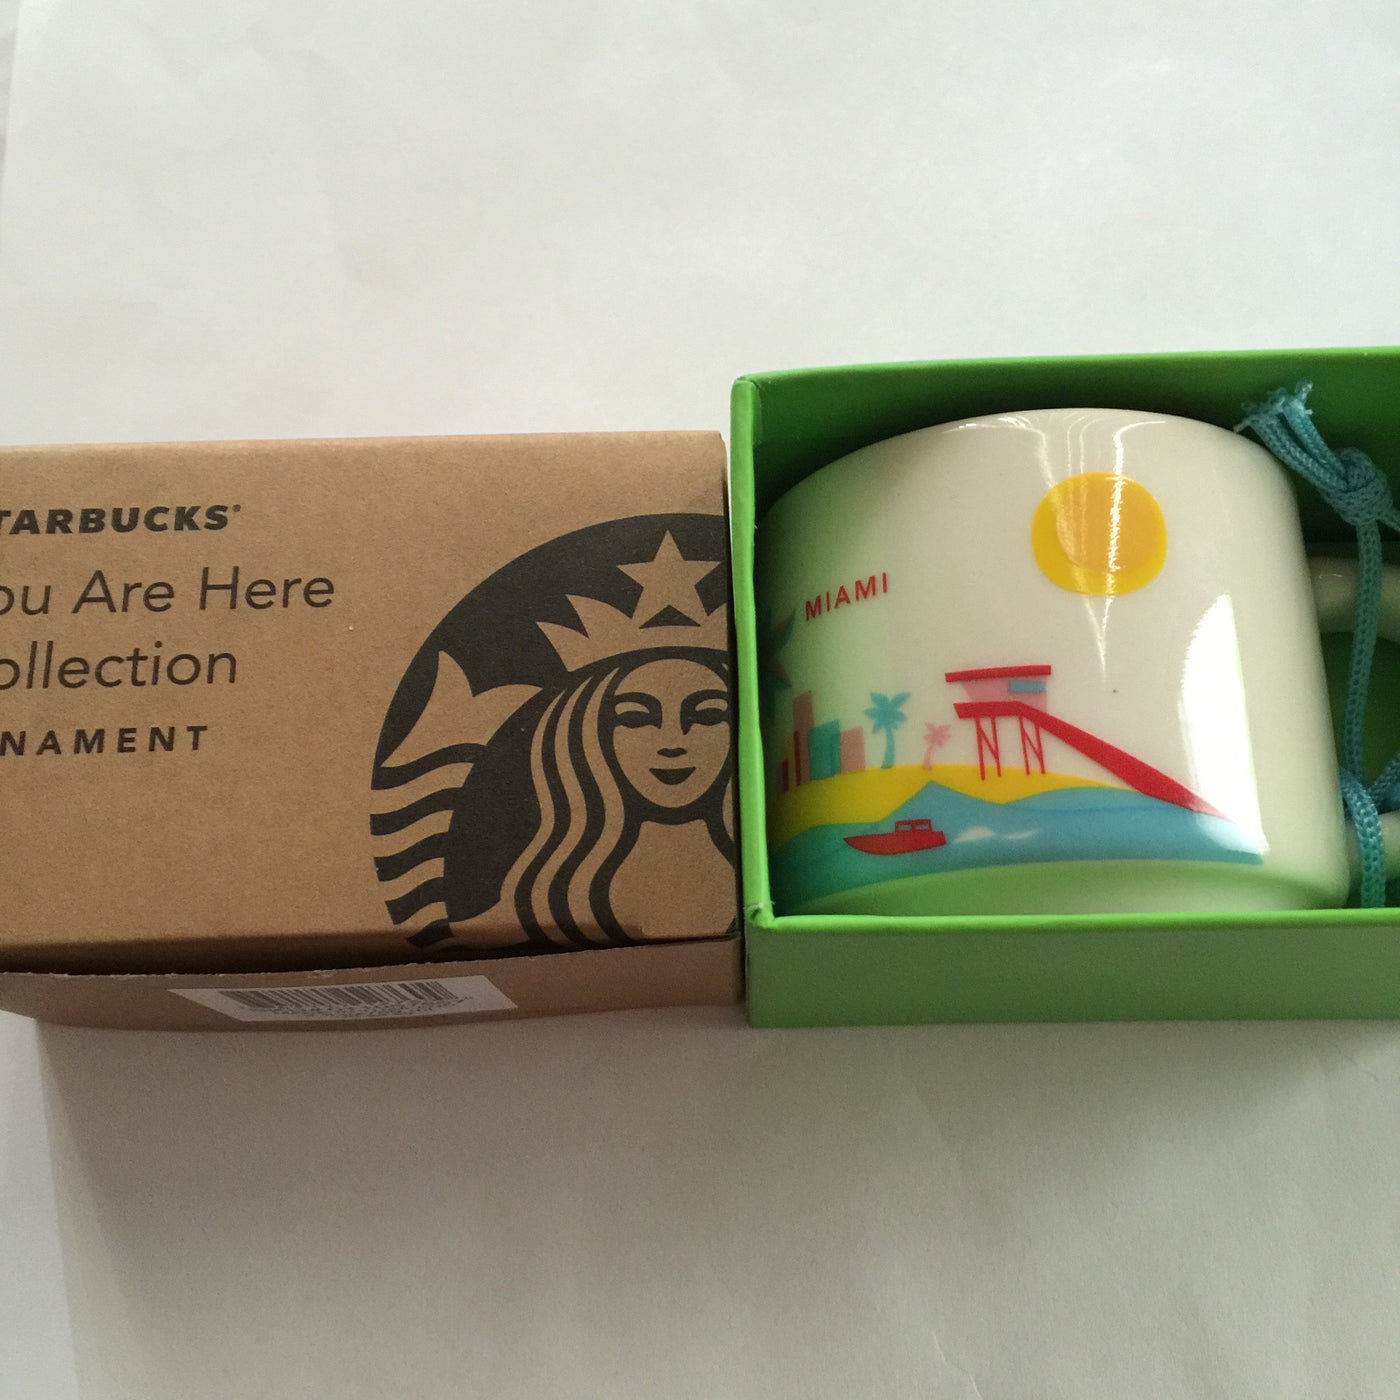 Starbucks Coffee You Are Here Miami Ceramic Mug Ornament New with Box